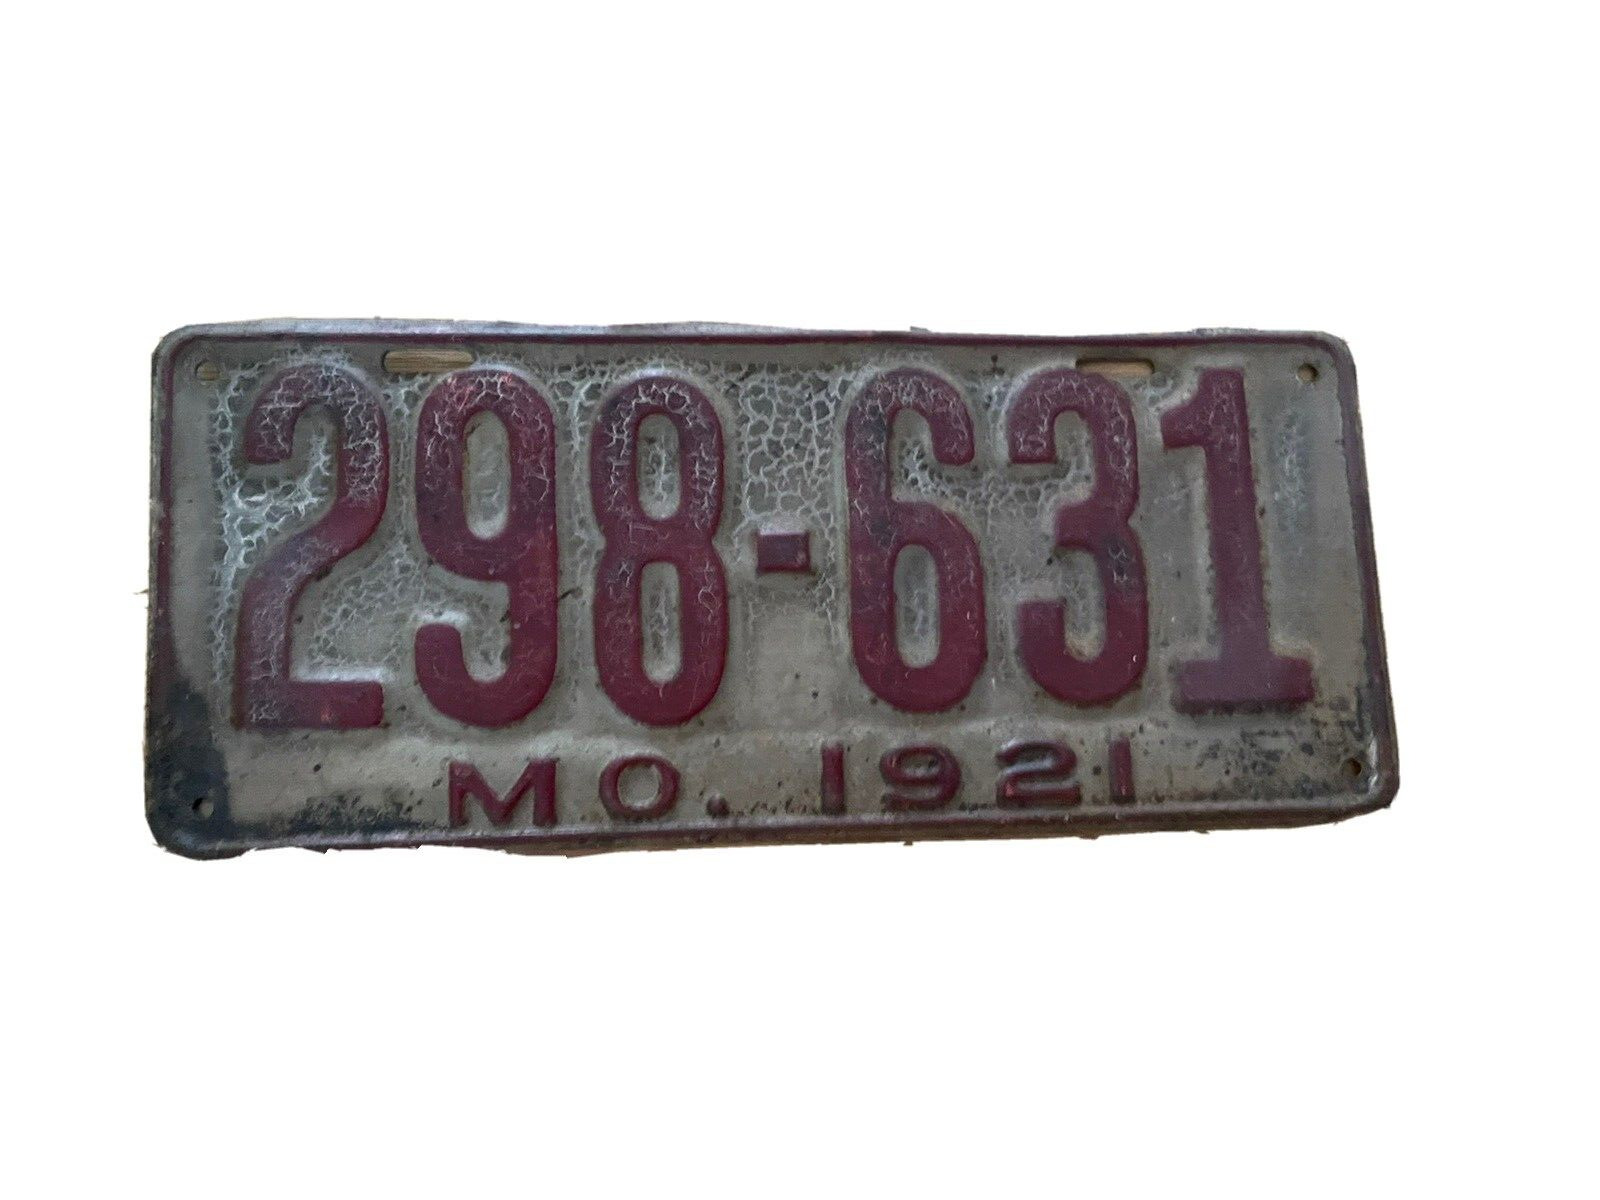 1921 Missouri license plate